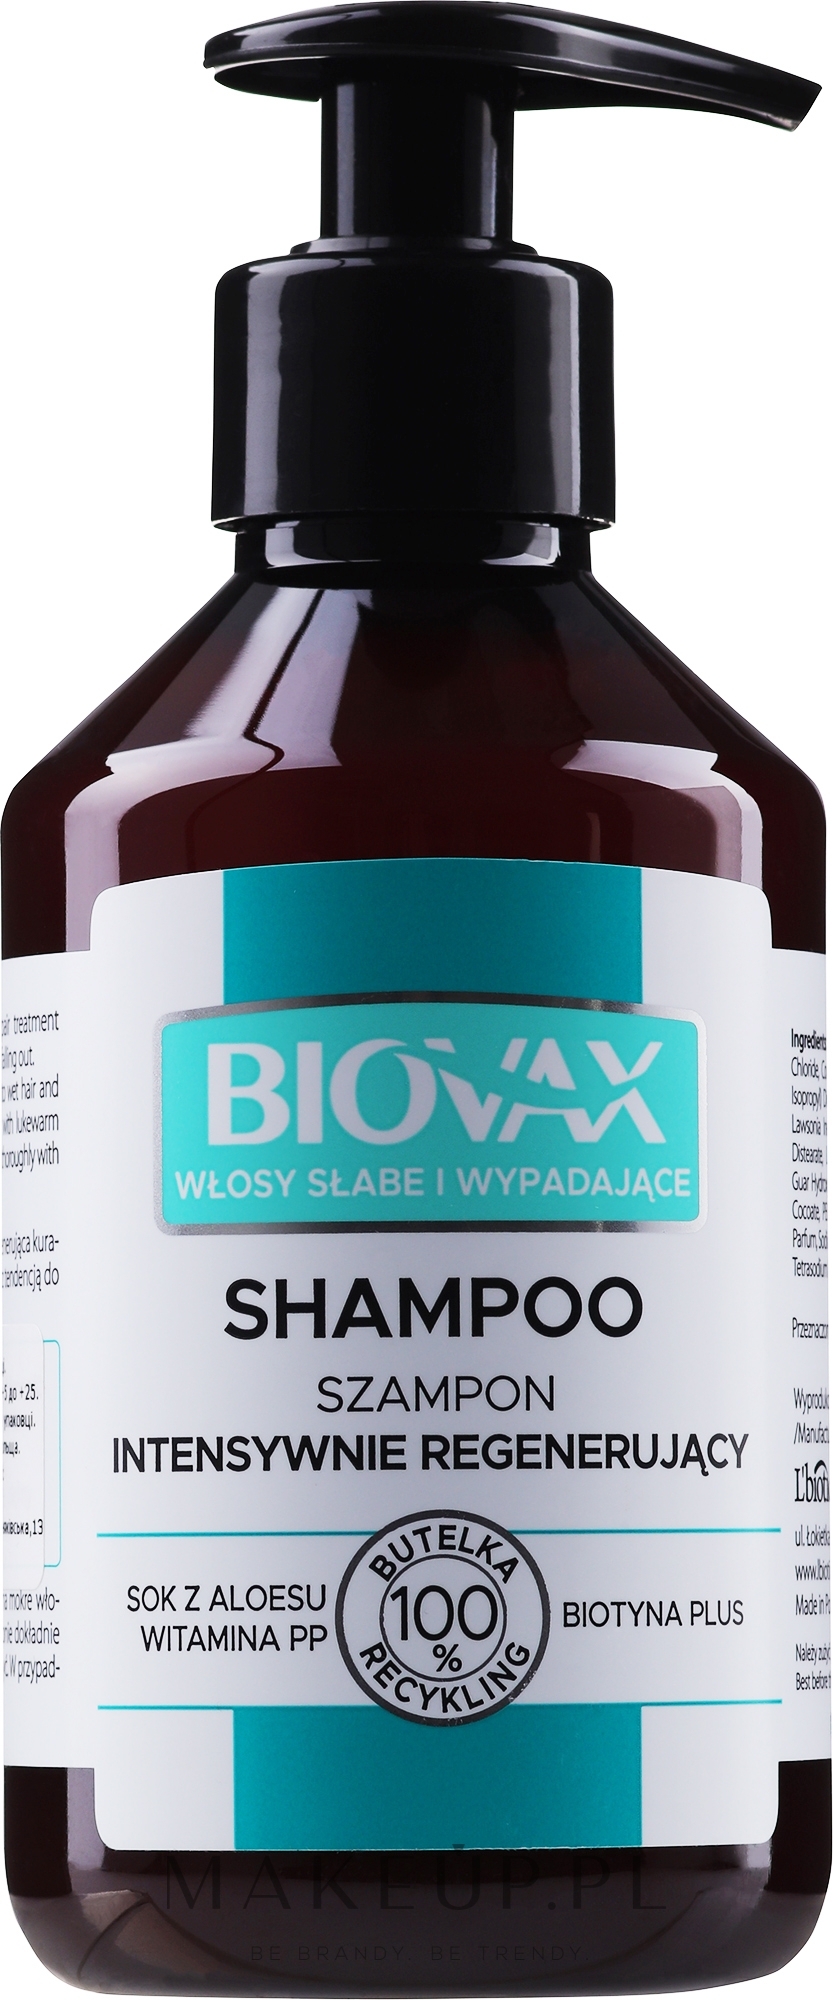 biovax ktory szampon najlepszy